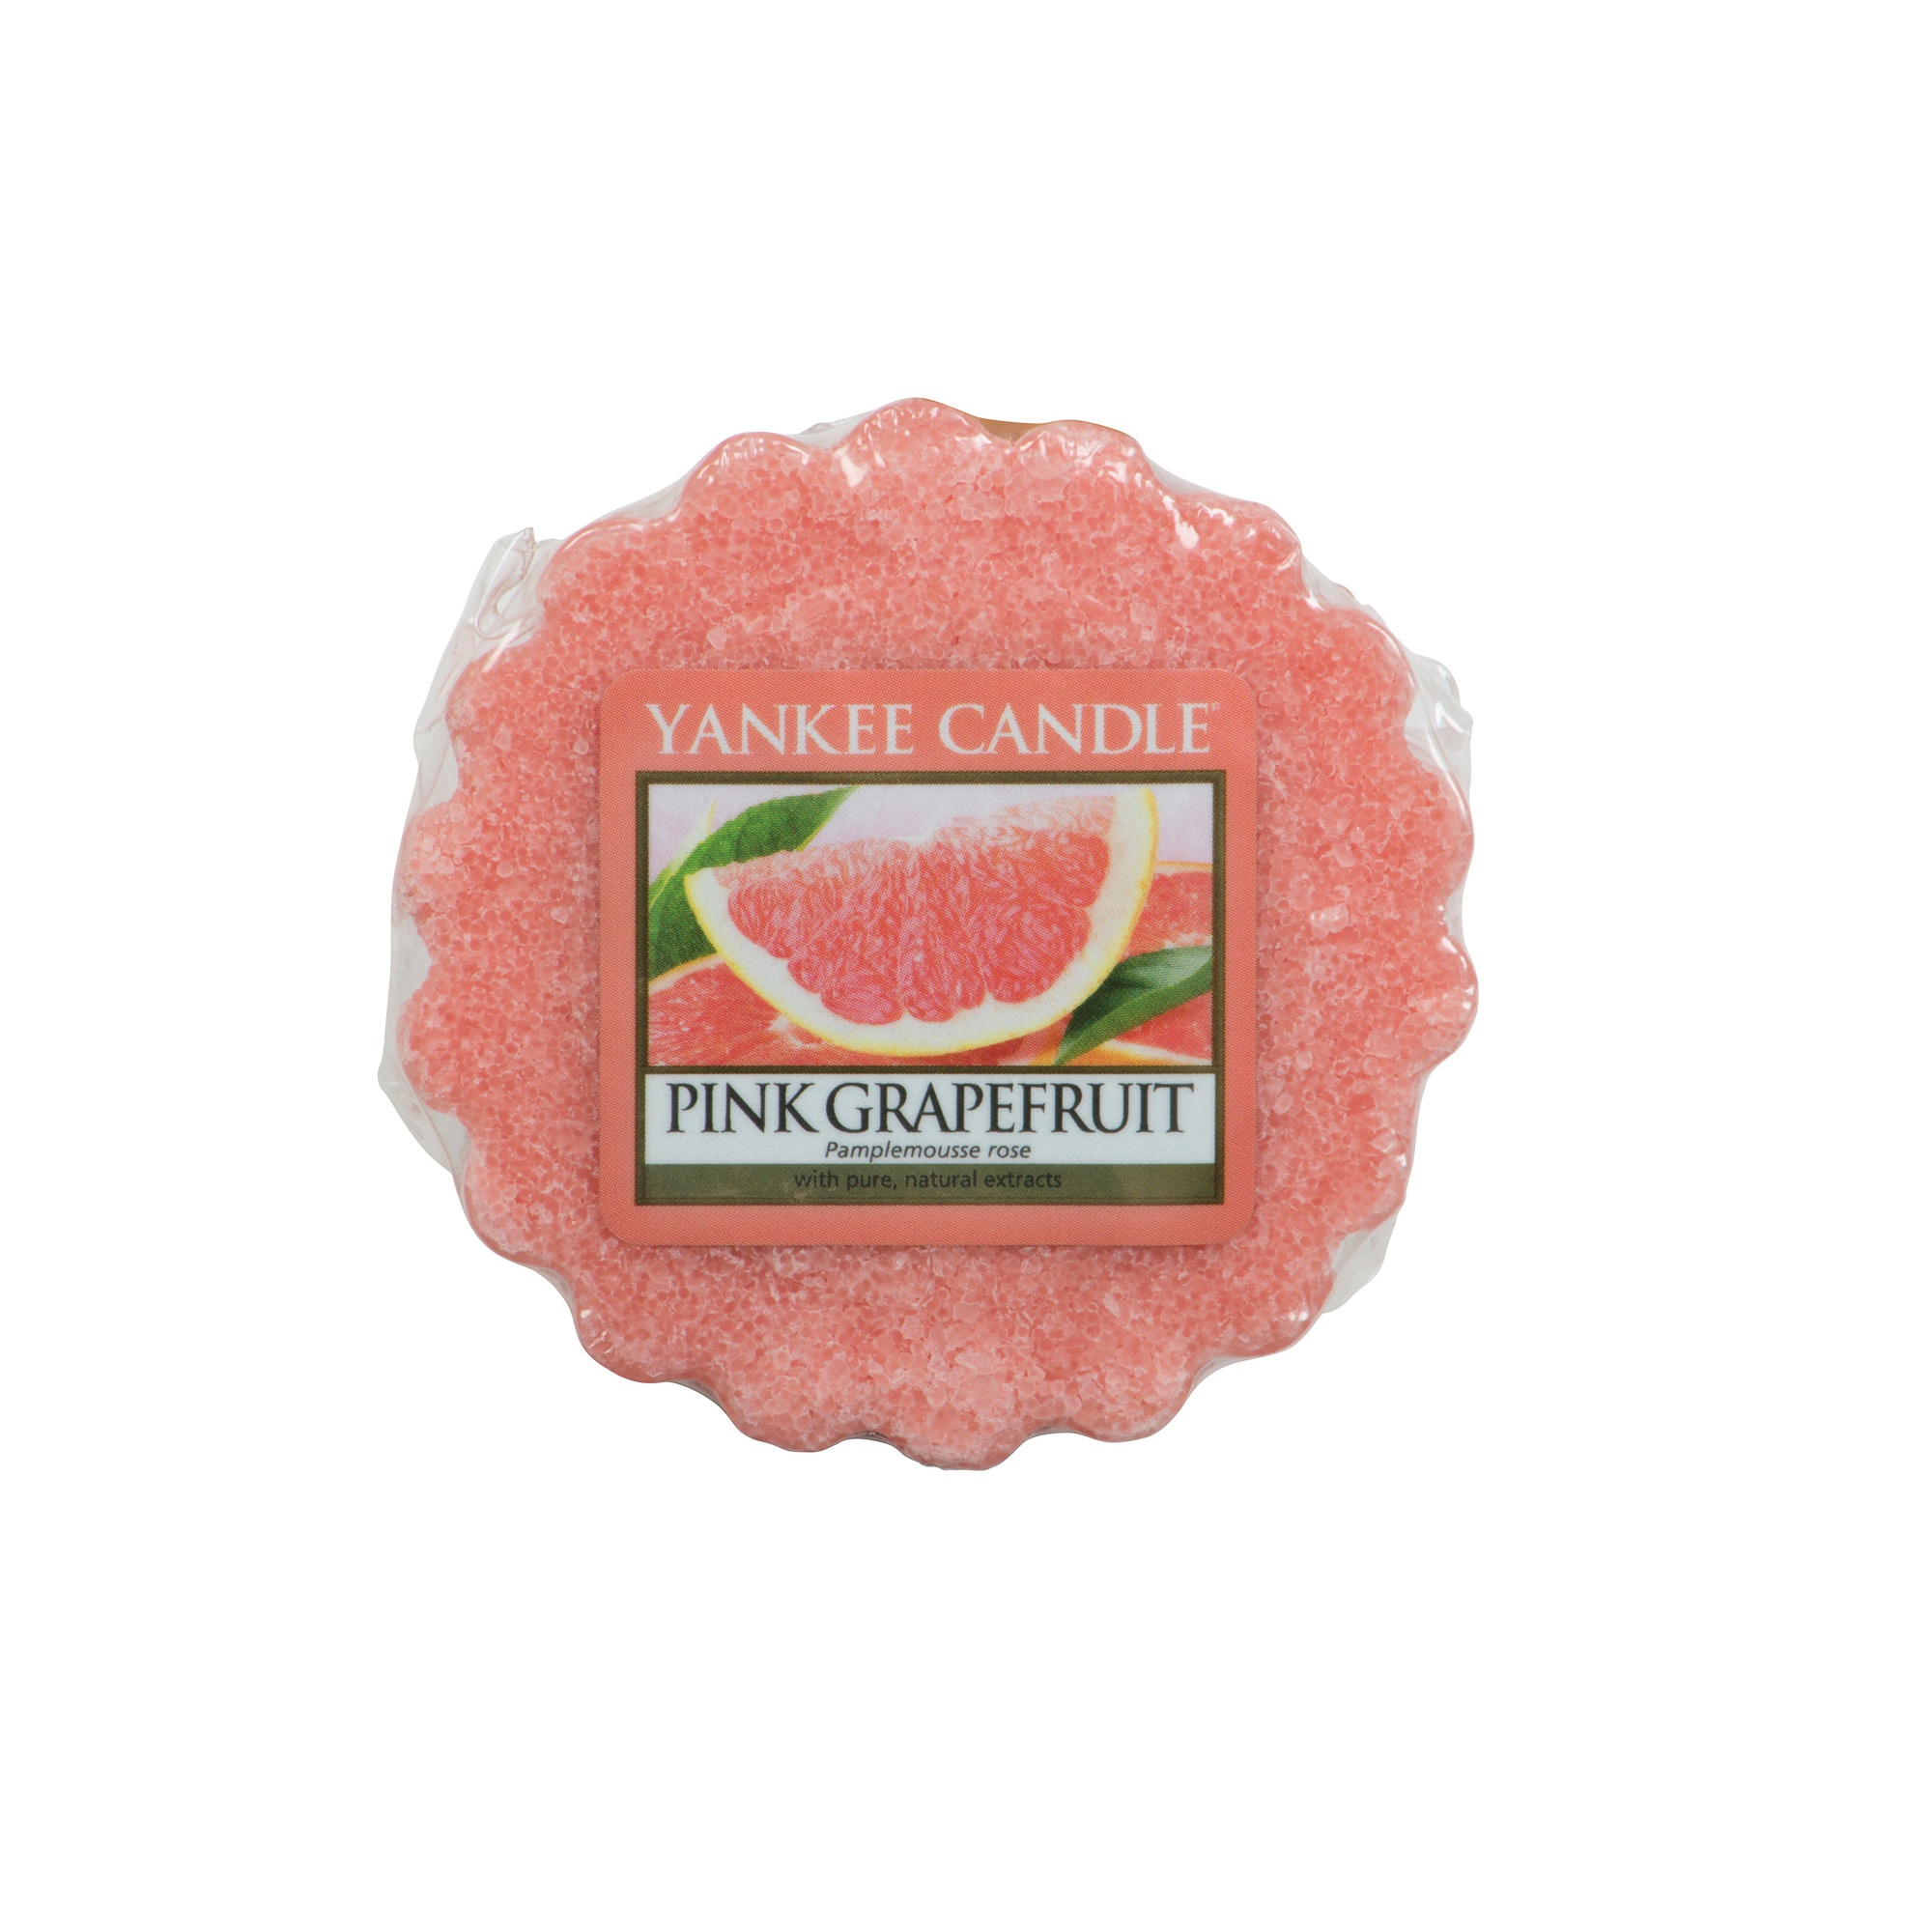 Ароматическая свеча-тарталетка Yankee candle Розовый грейпфрут 22 г ароматическая свеча пробная yankee candle ение вишни 1542840e